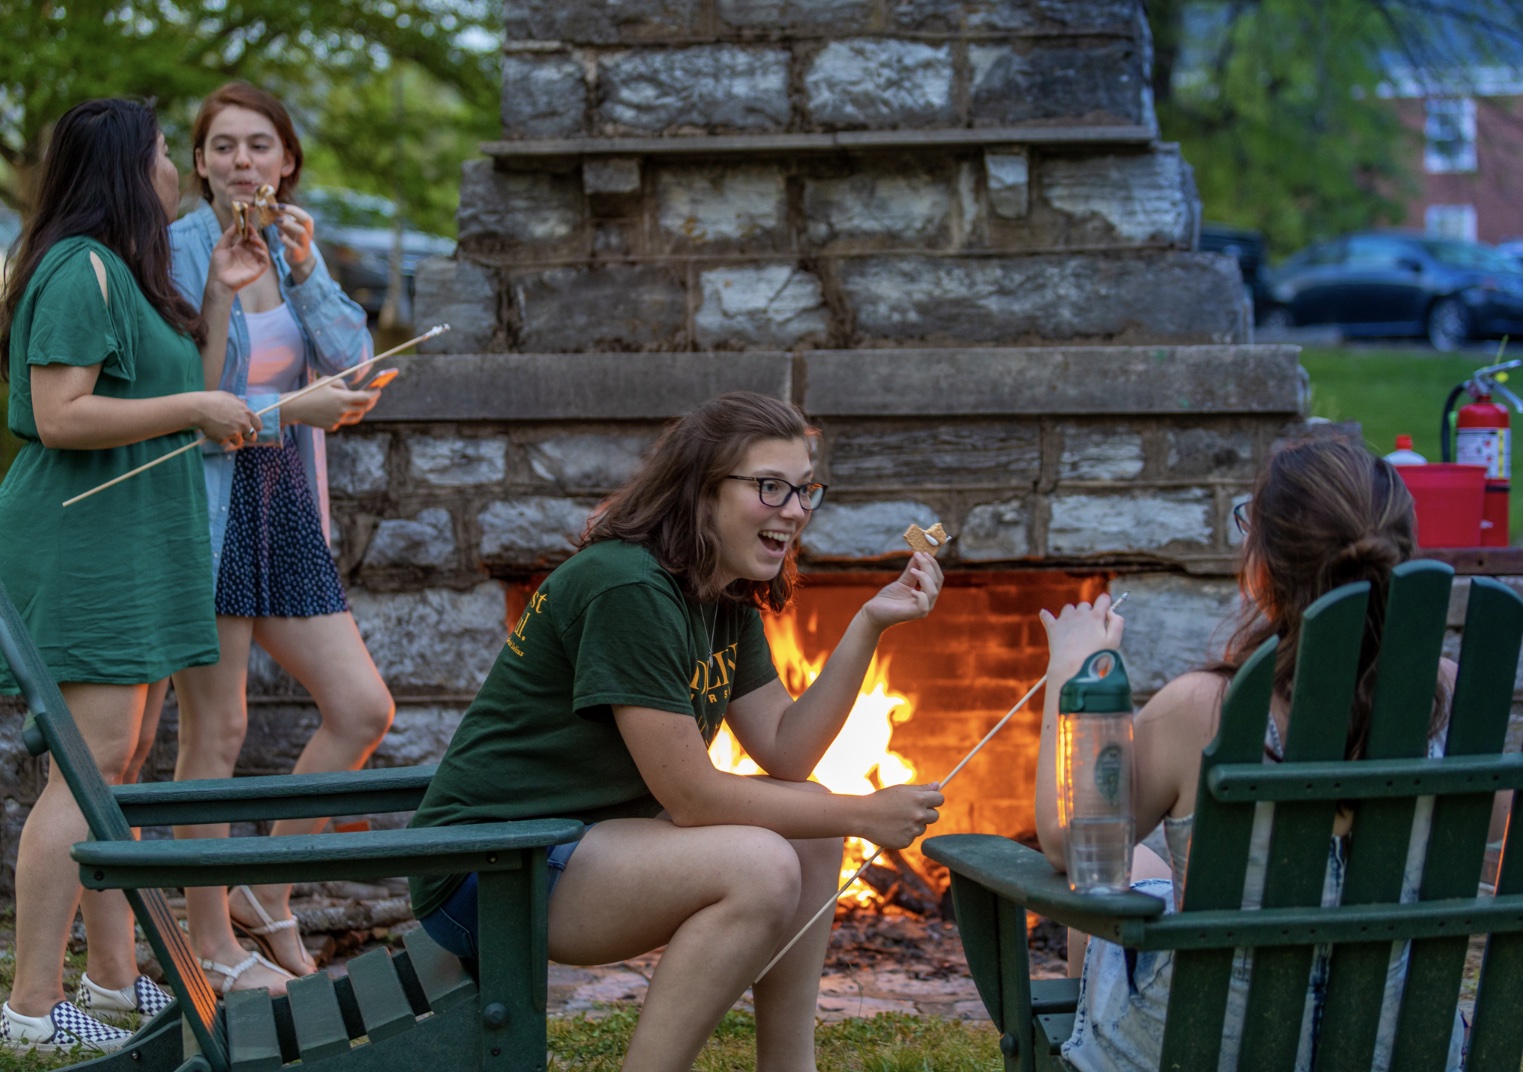 Students socializing by fireplace